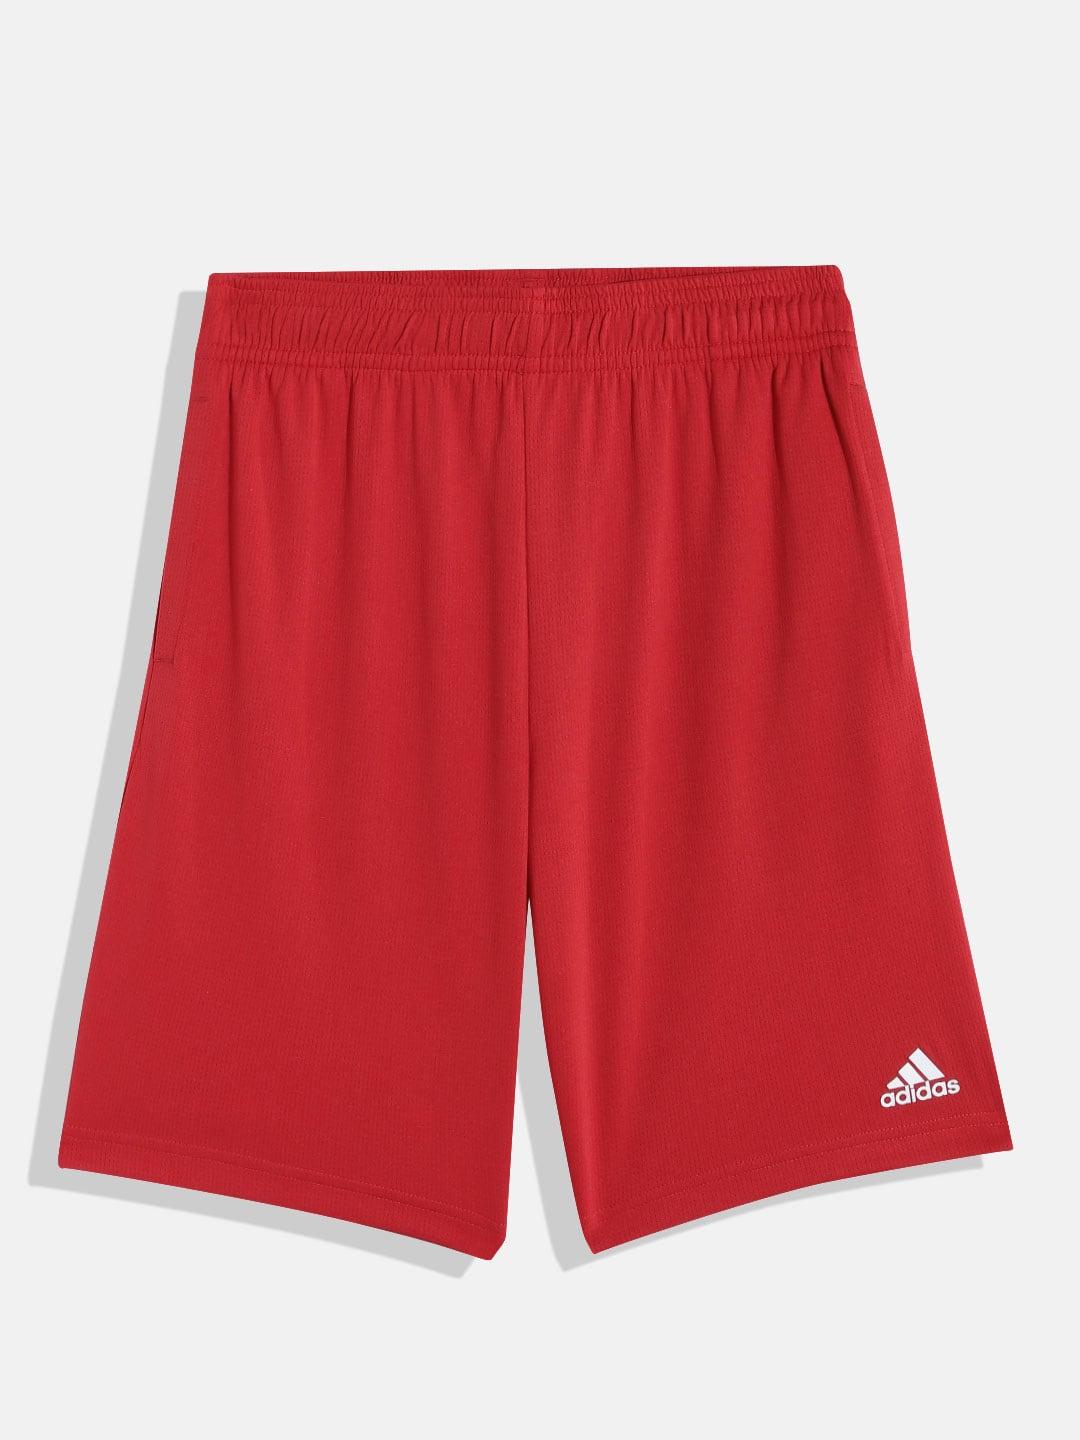 adidas boys red shorts